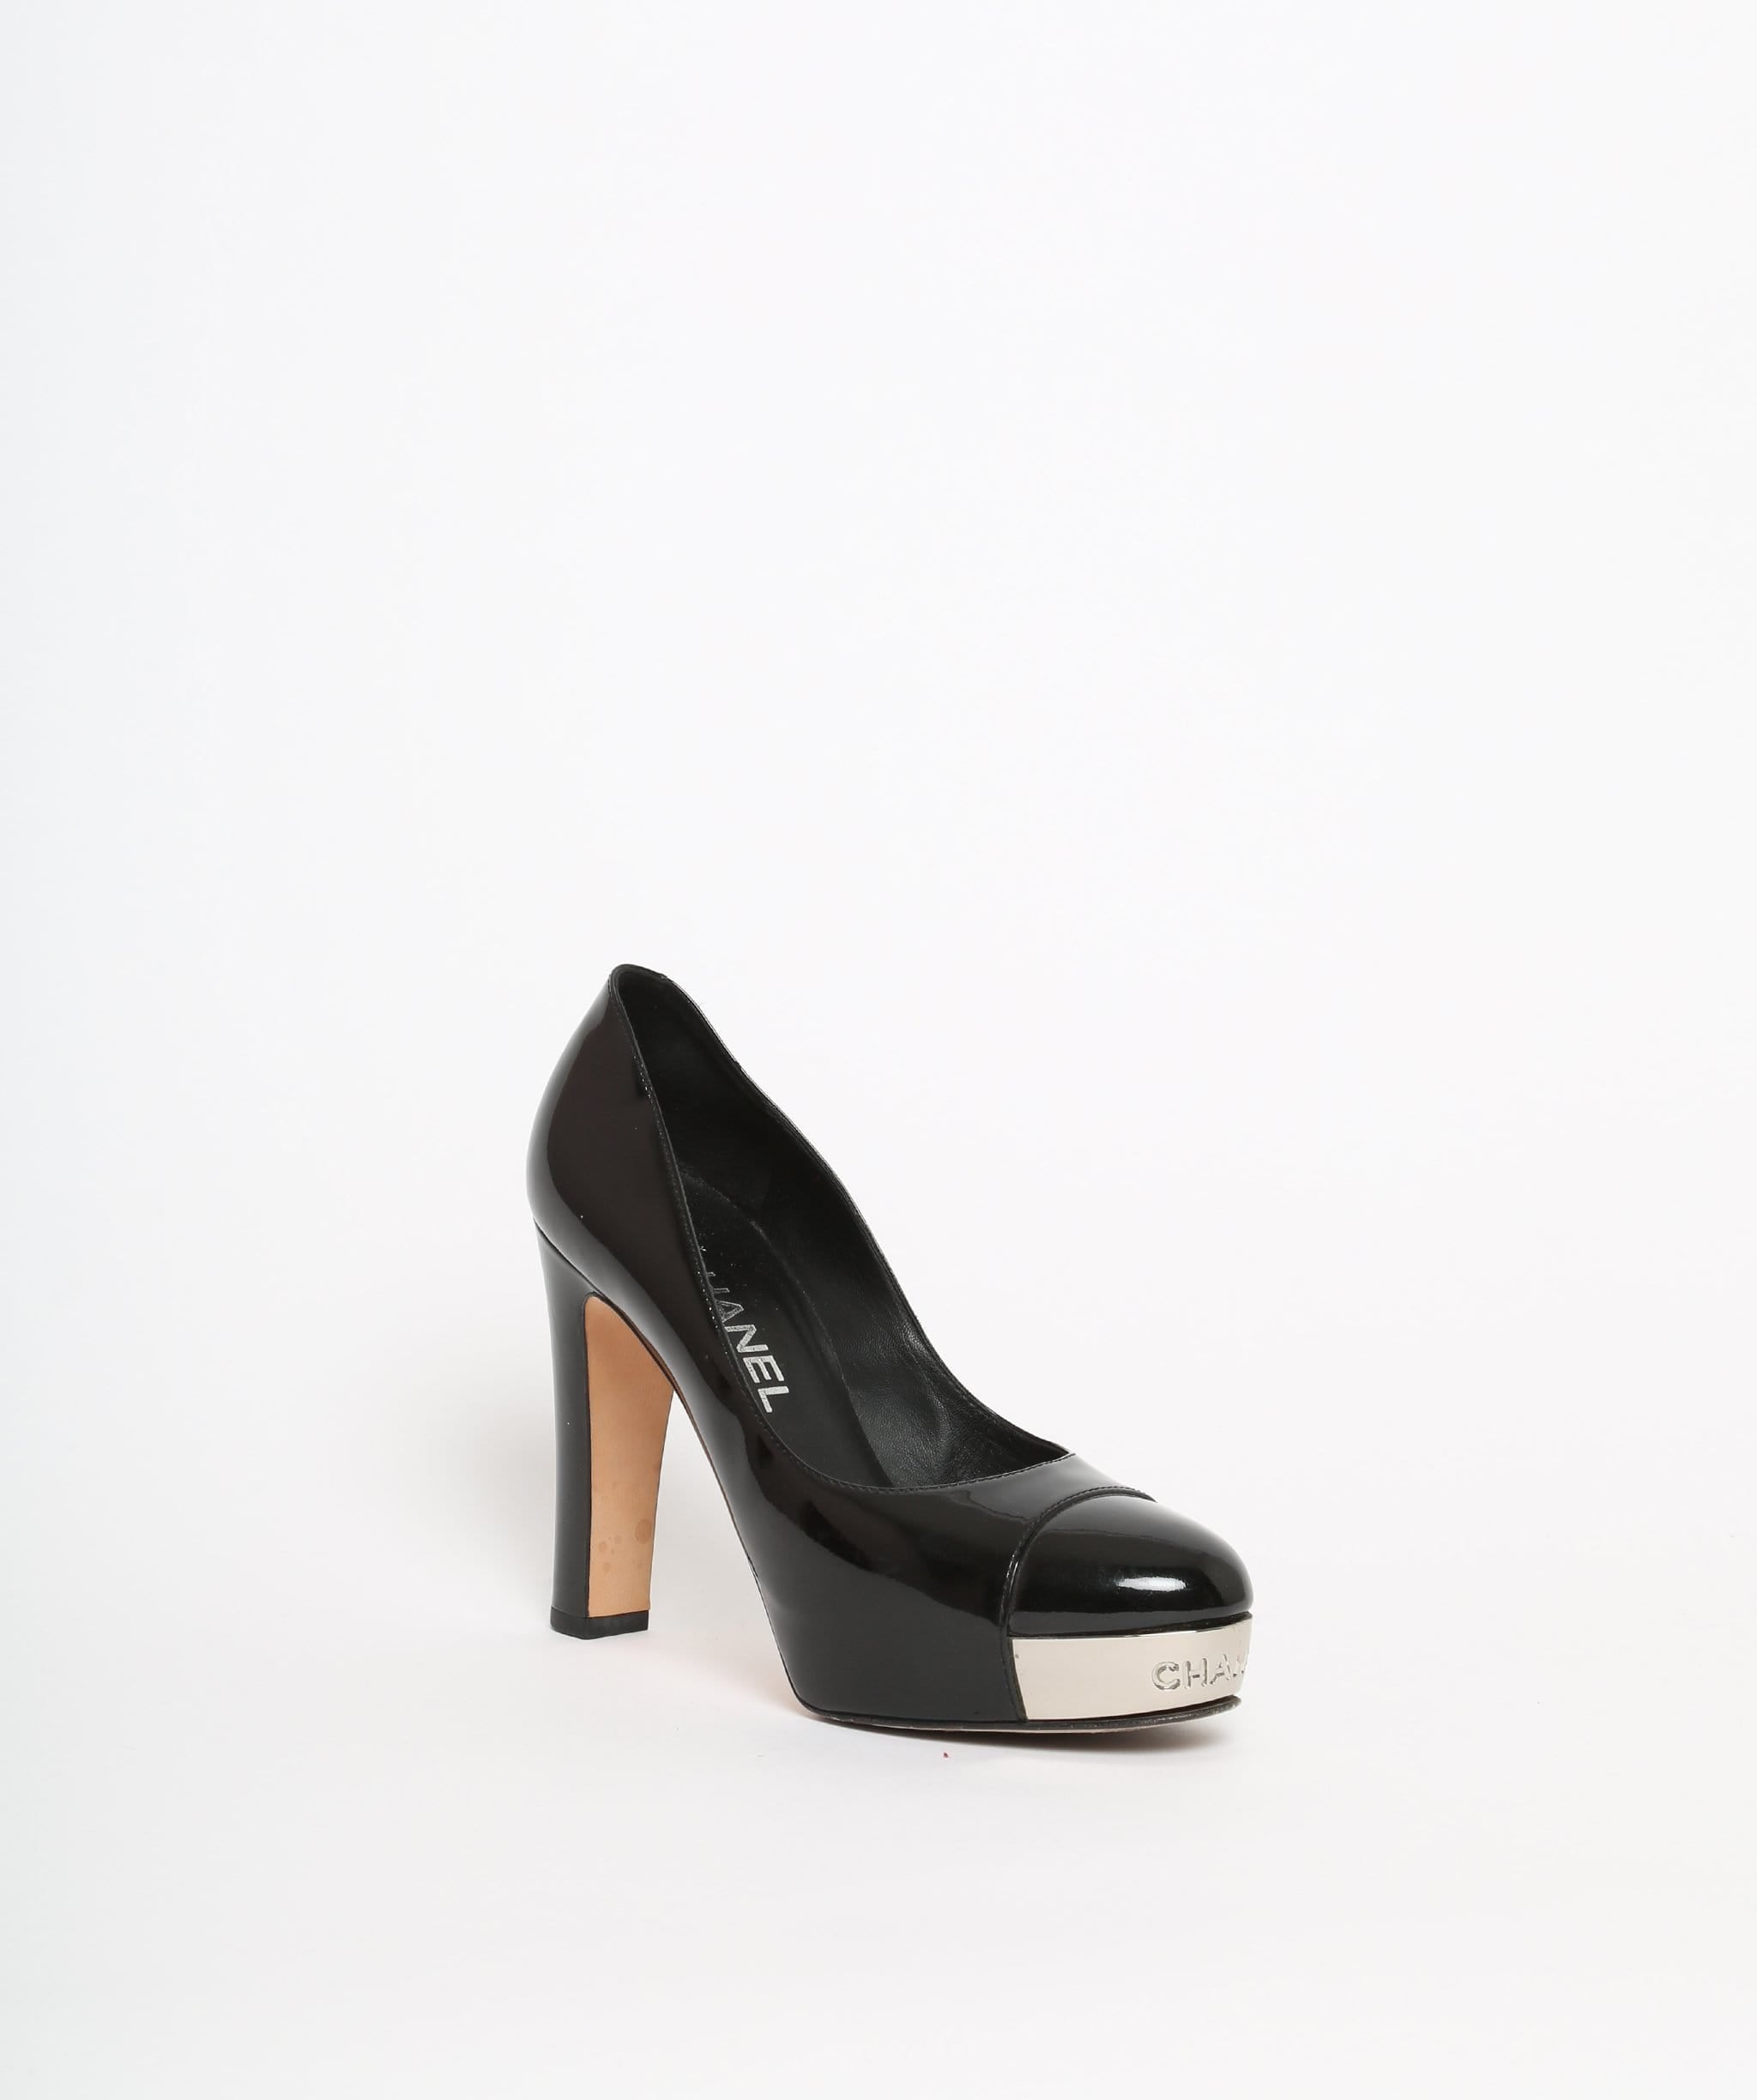 Chanel Chanel Black Patent Stiletto Heels Size 37